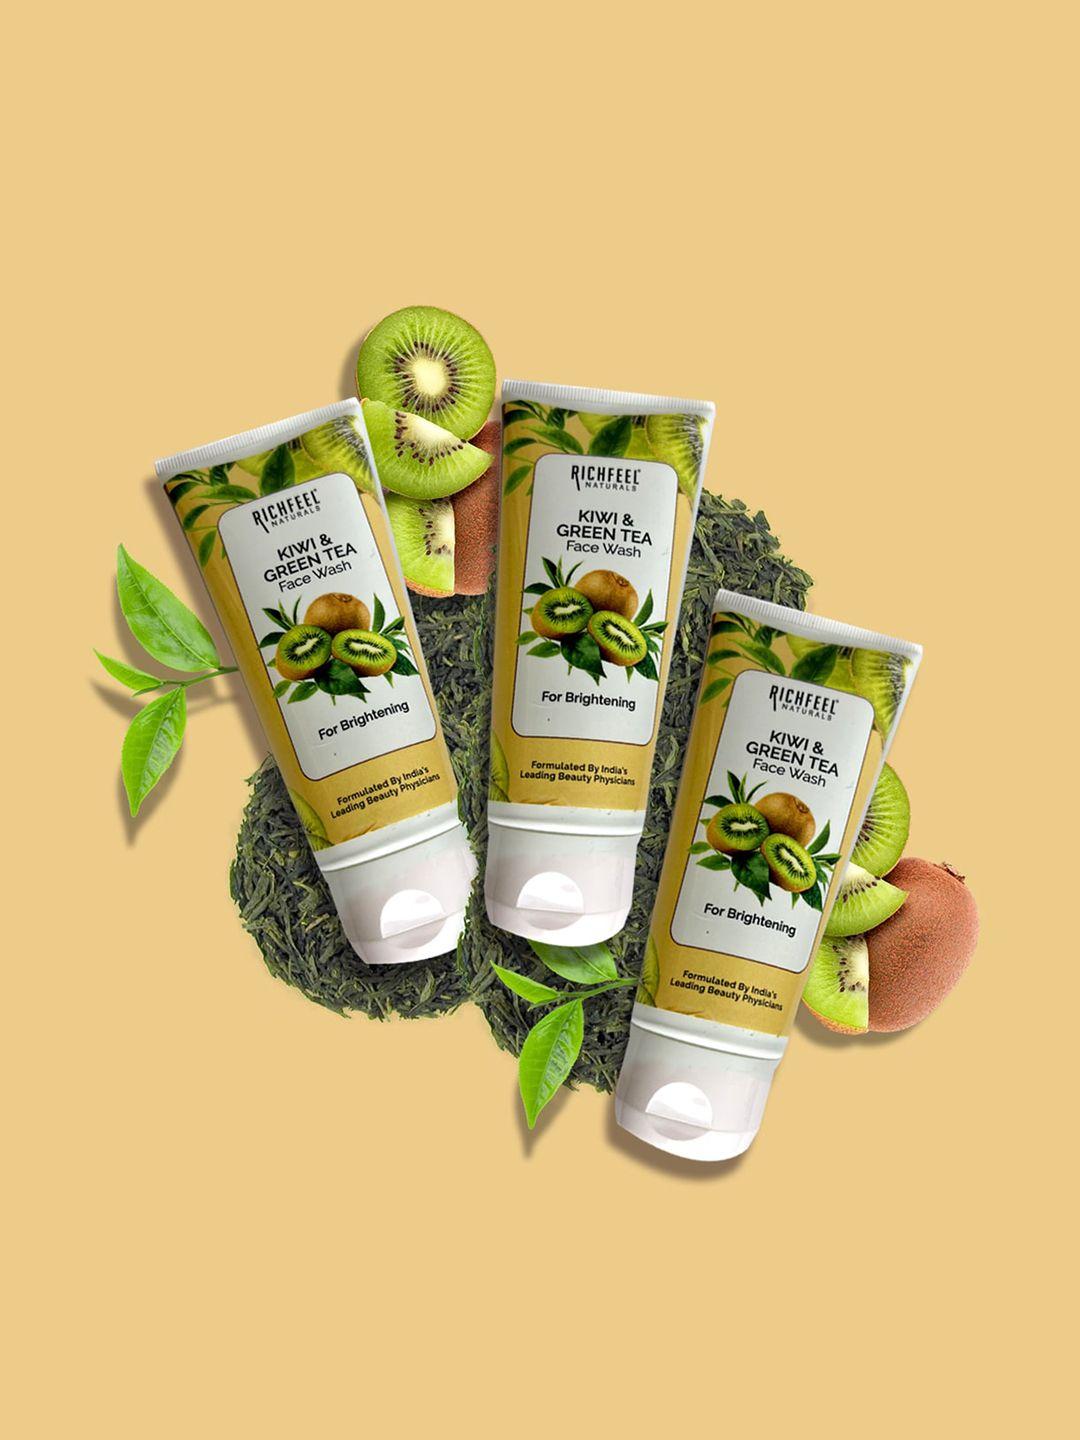 richfeel set of 3 kiwi & green tea face wash for brightening skin - 100 g each